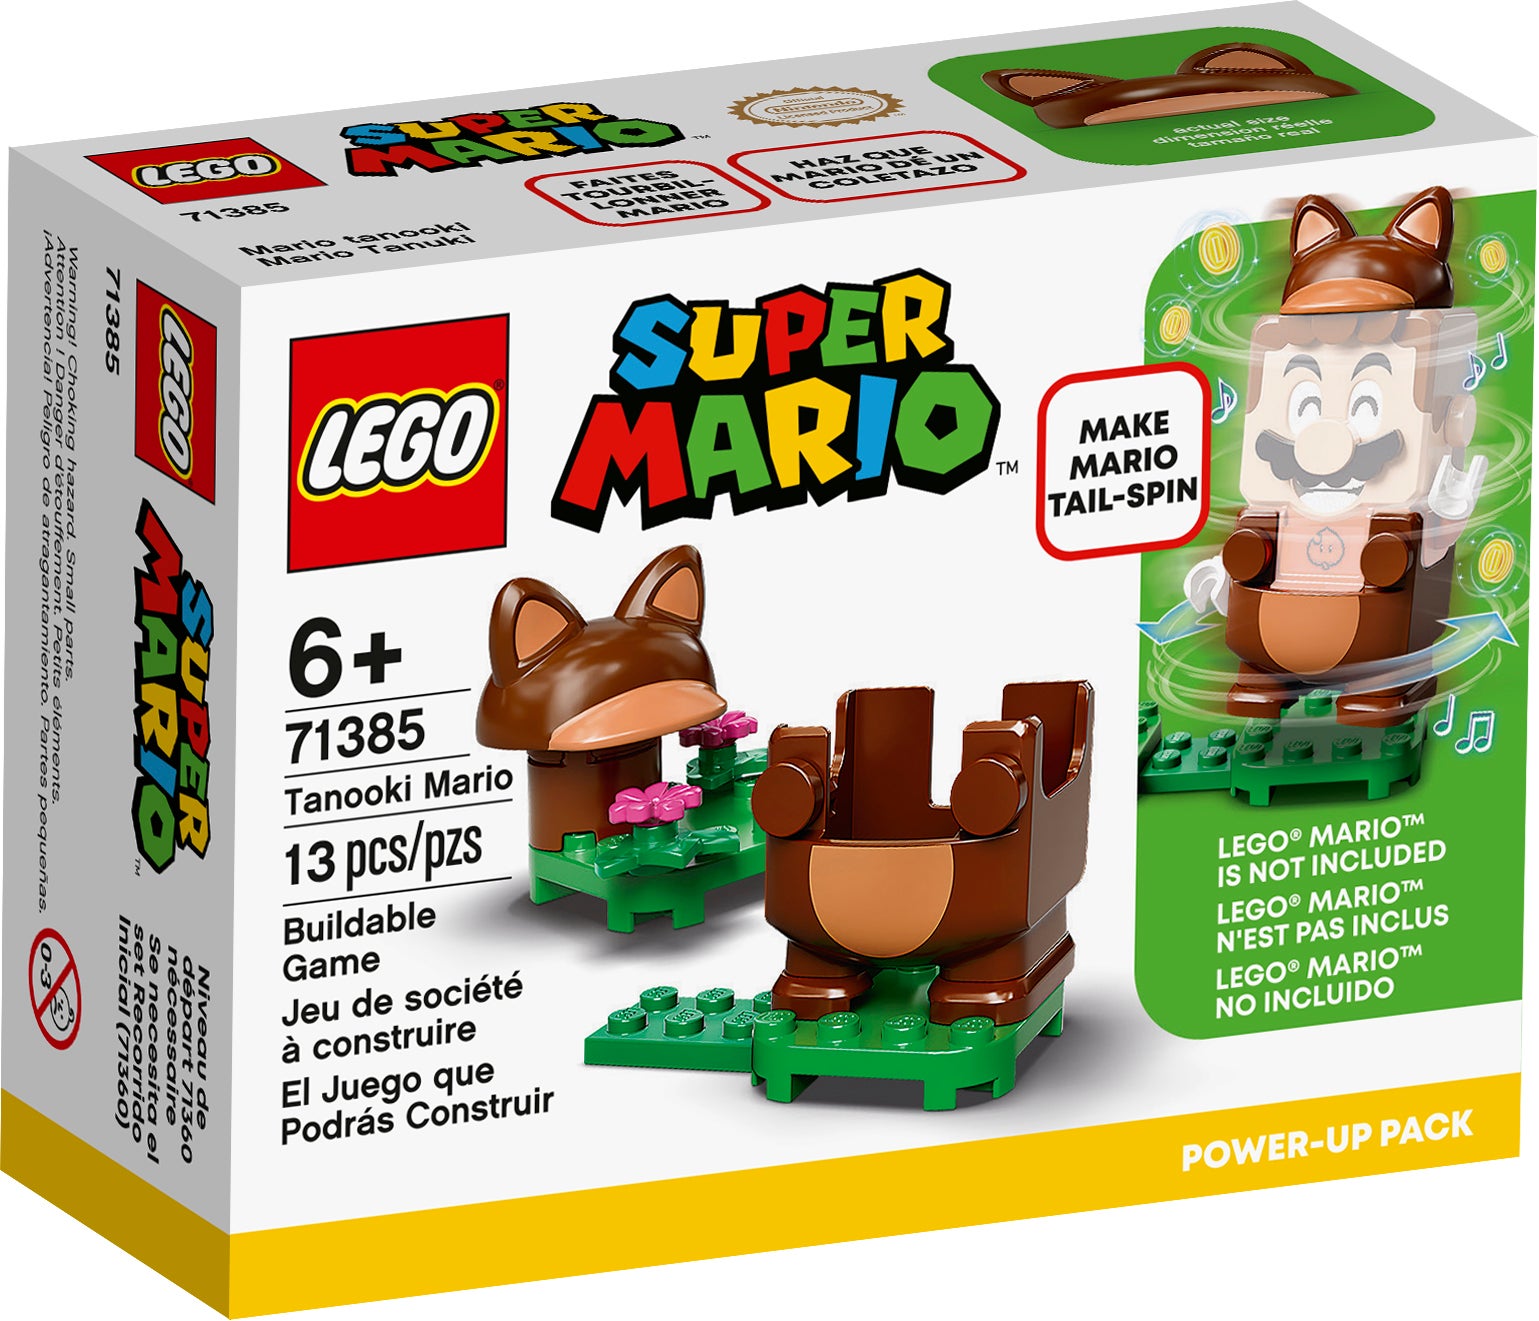 13 Pieces 71385 LEGO Super Mario Tanooki Mario Power-Up Pack